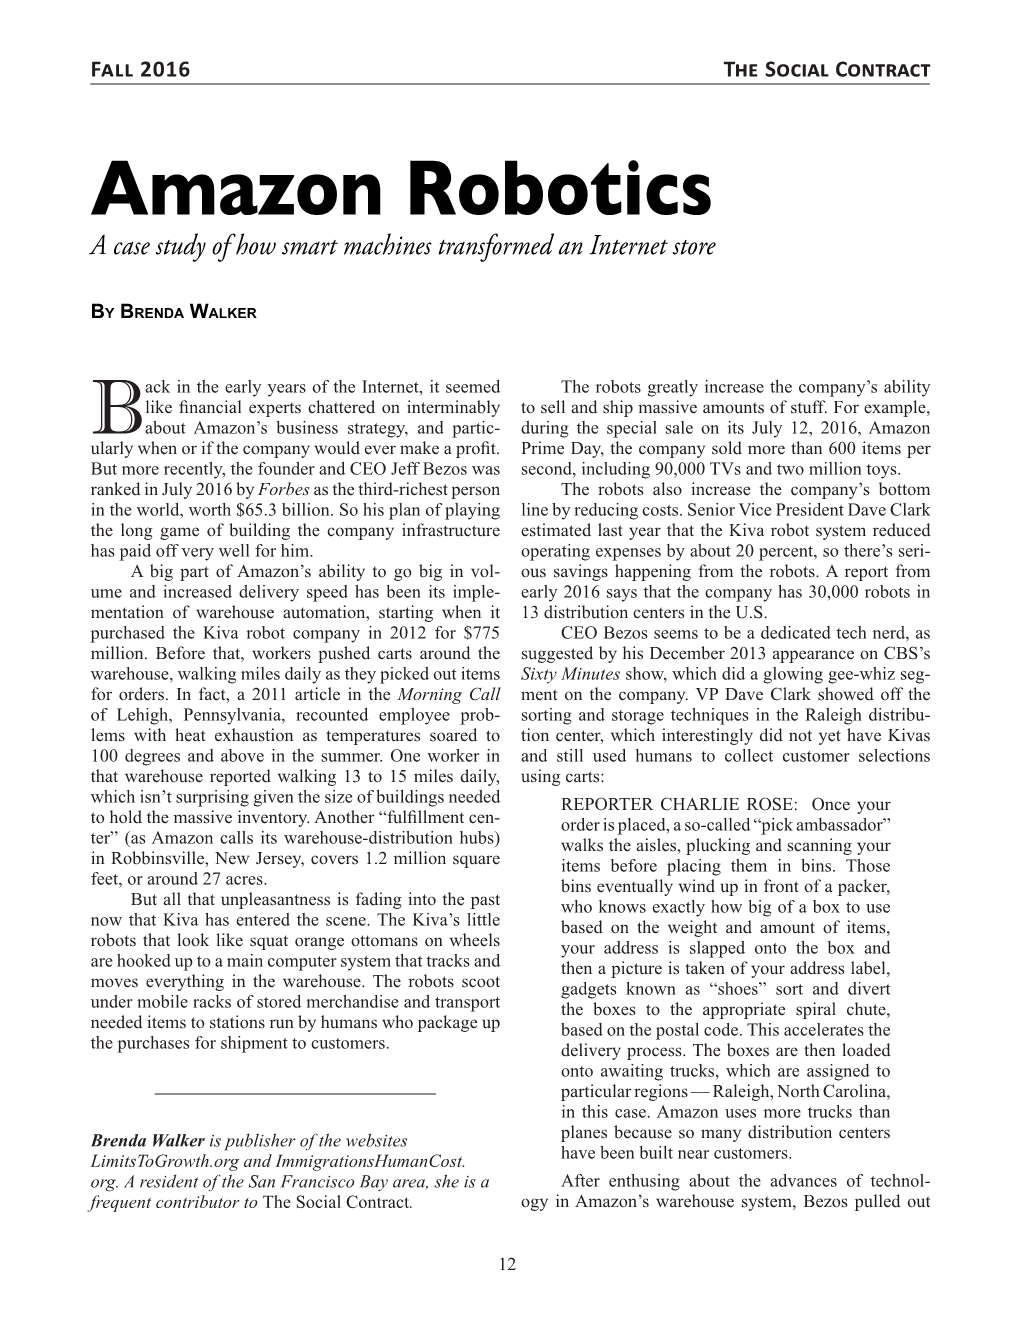 Amazon Robotics a Case Study of How Smart Machines Transformed an Internet Store